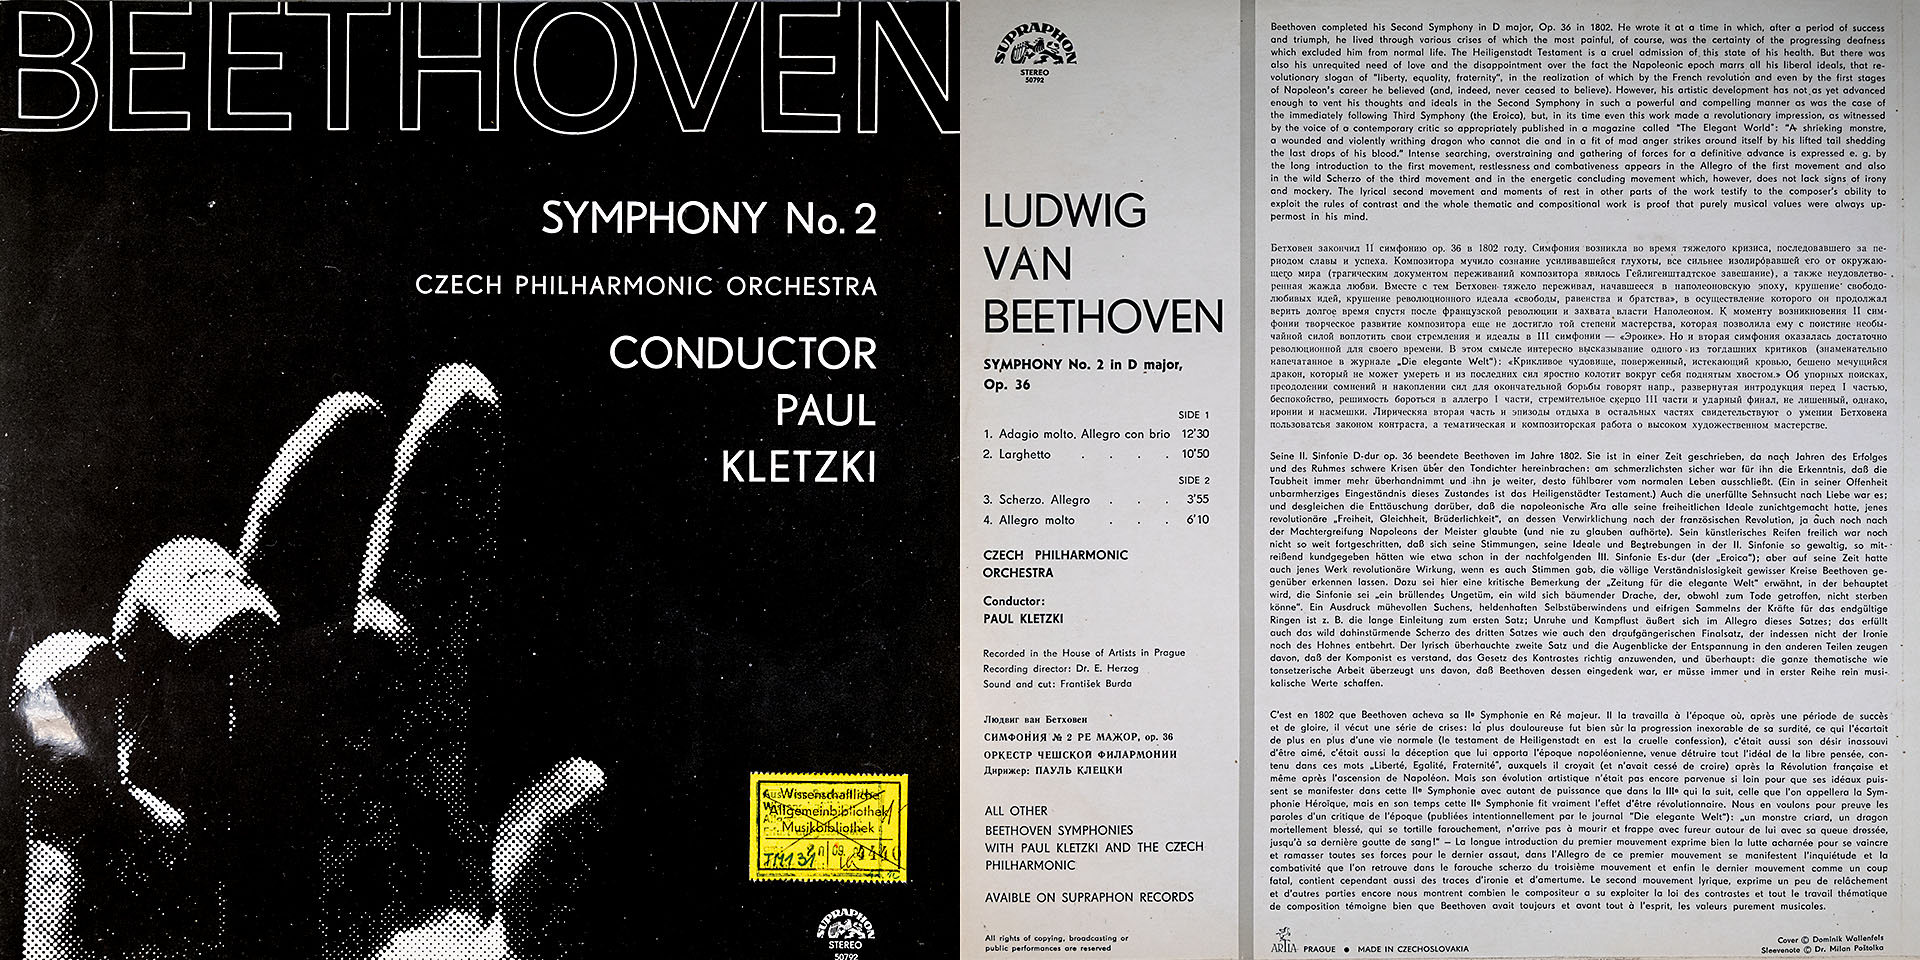 Beethoven - Sinfonie Nr. 2 in D major op. 36 - Czech Philharmonic Orchestra, Dirigent  Paul Kletzki